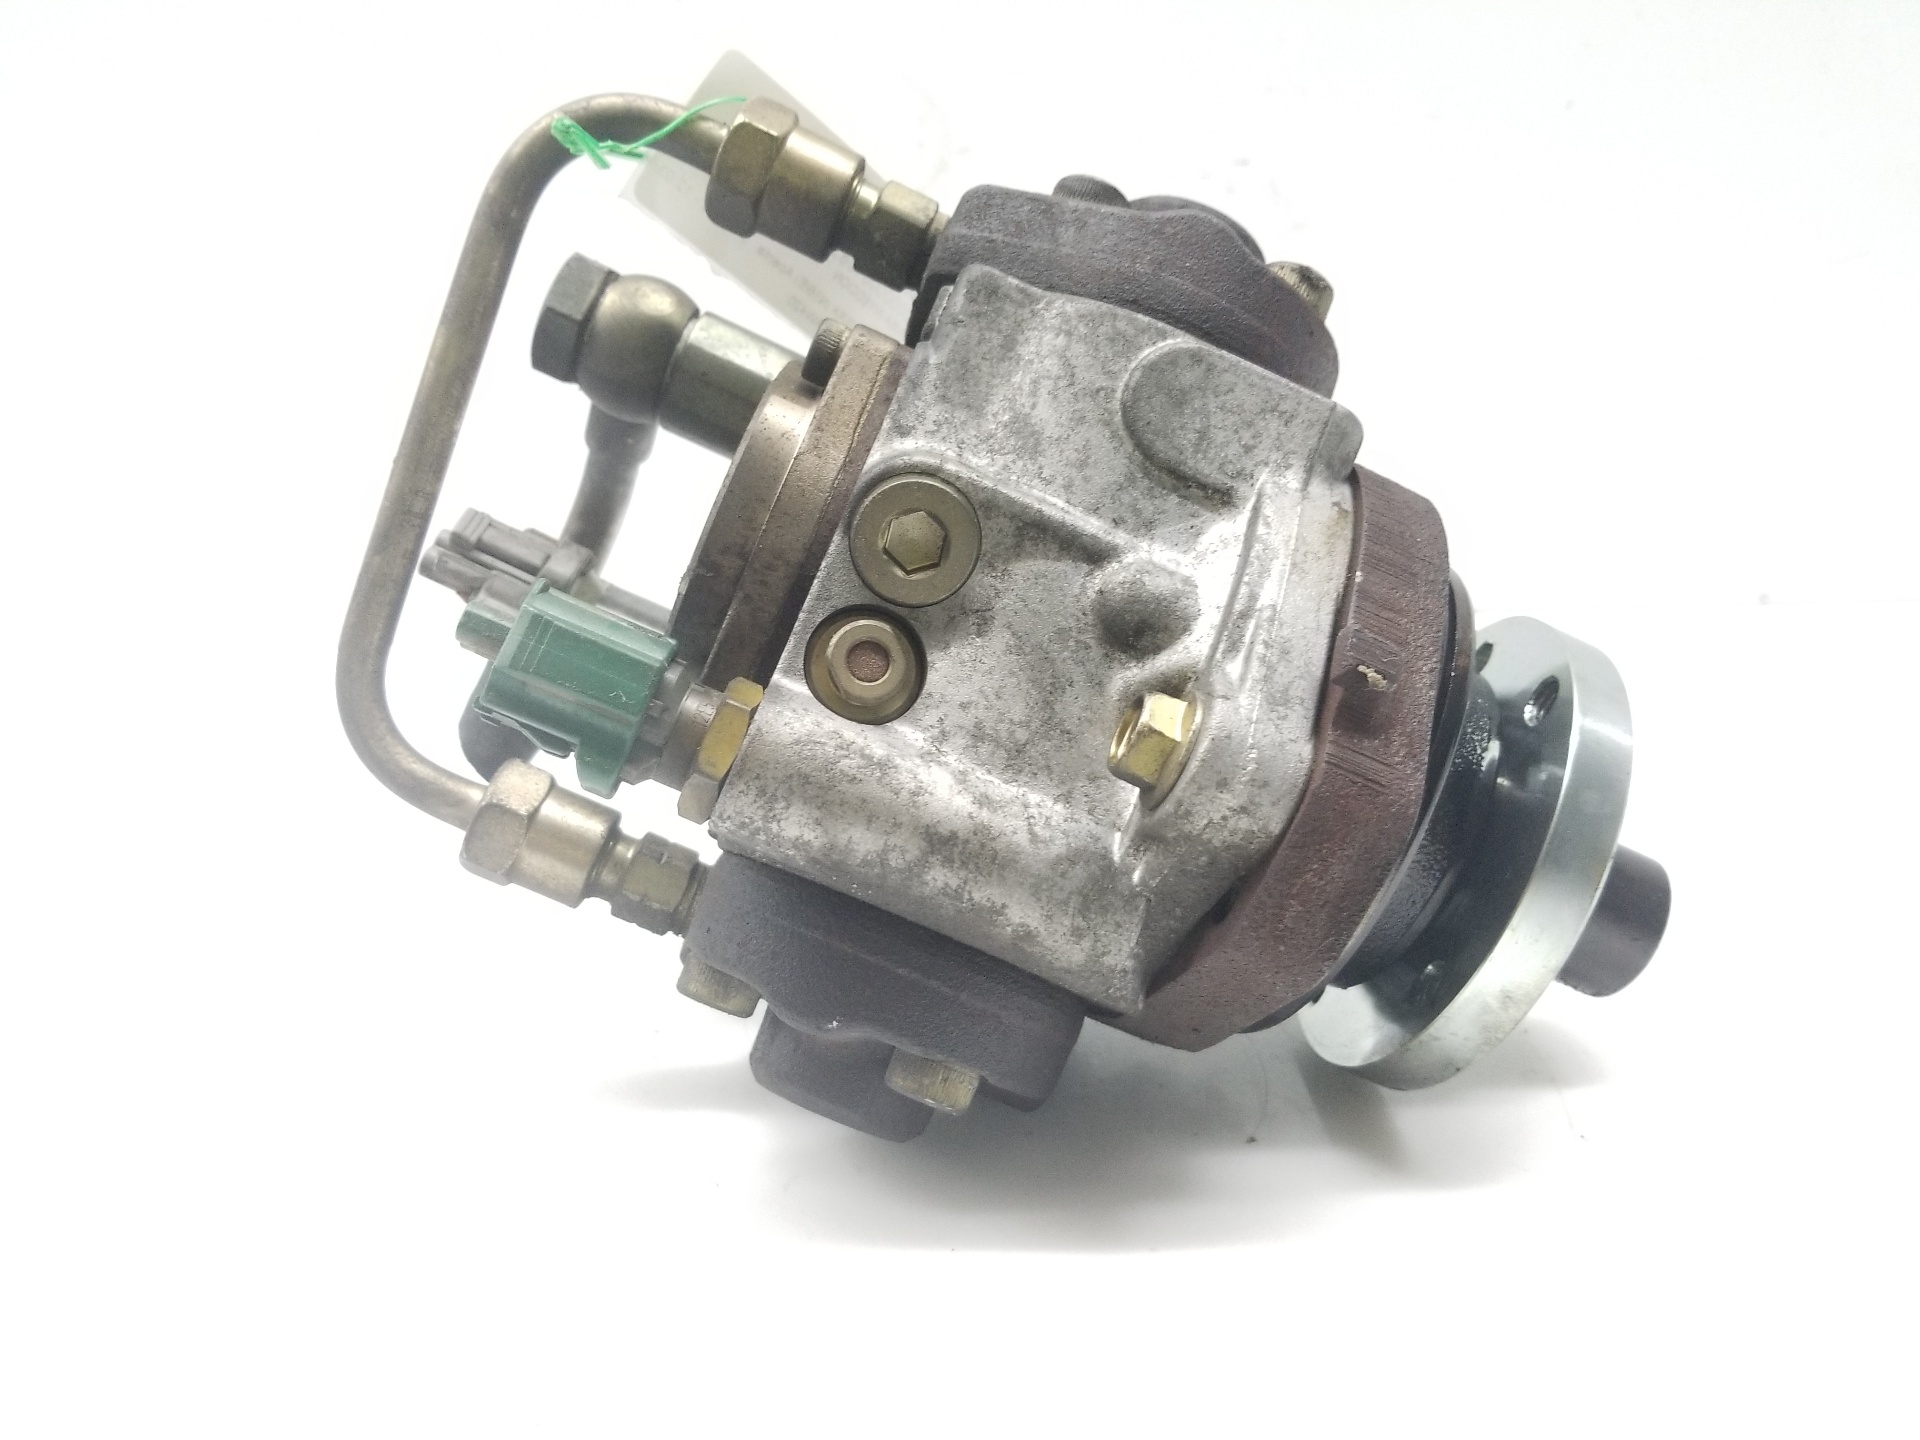 NISSAN Almera N16 (2000-2006) High Pressure Fuel Pump 16700AW420, 16700AW420 25232410